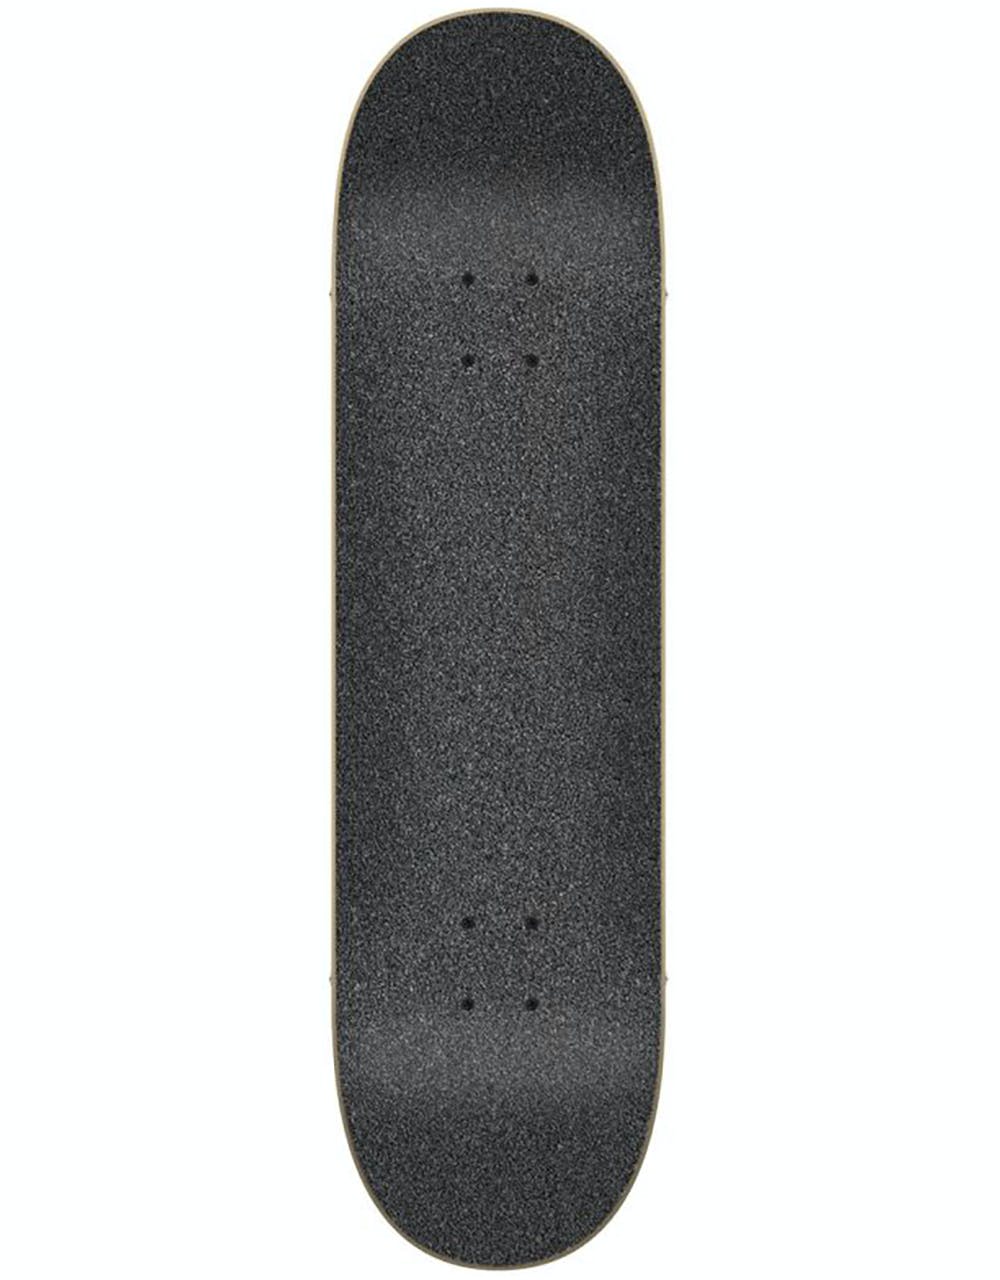 Flip Odyssey Logo Complete Skateboard - 8"